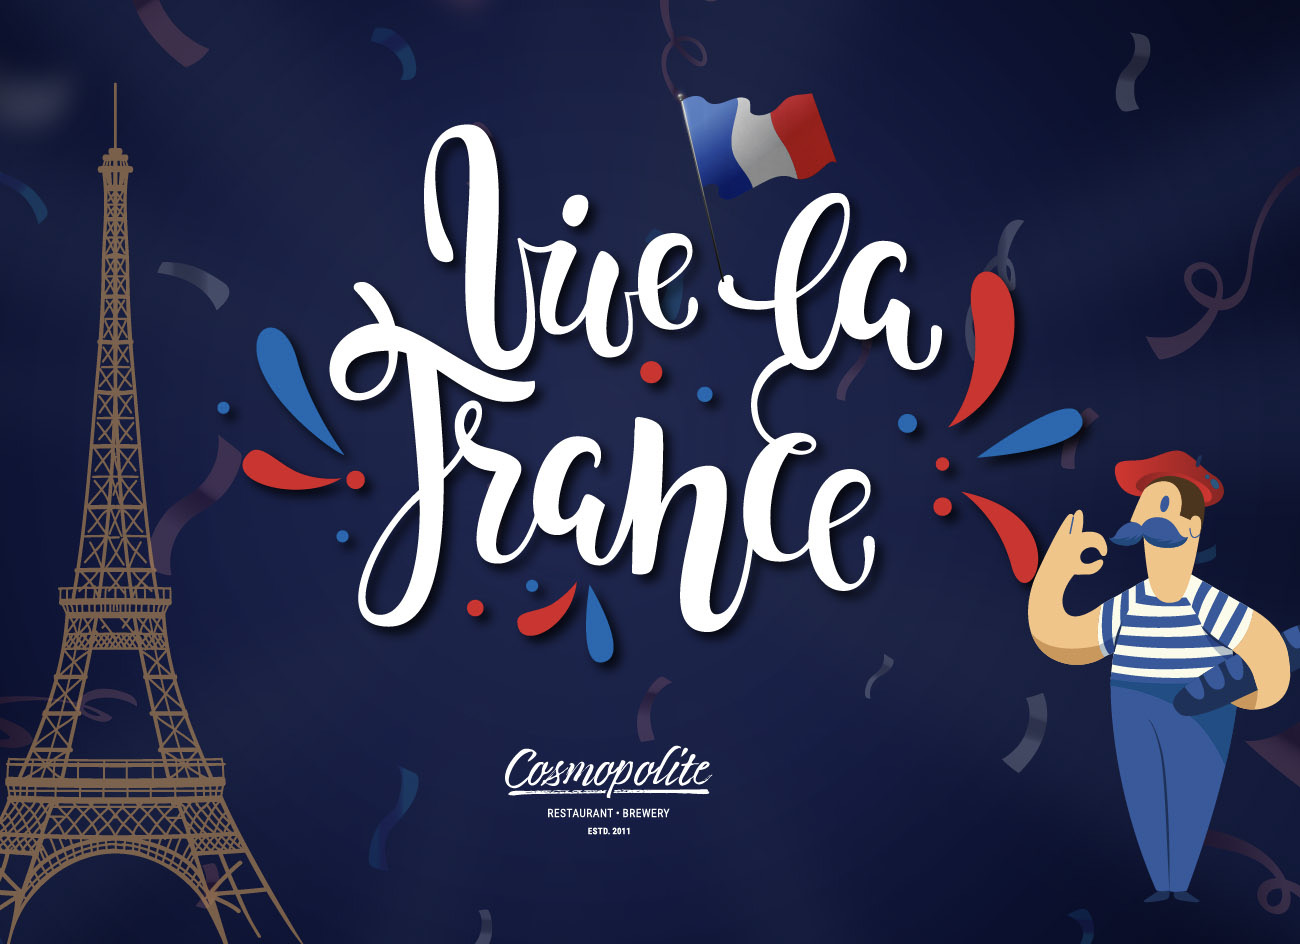 Viva la France! Spring greetings!